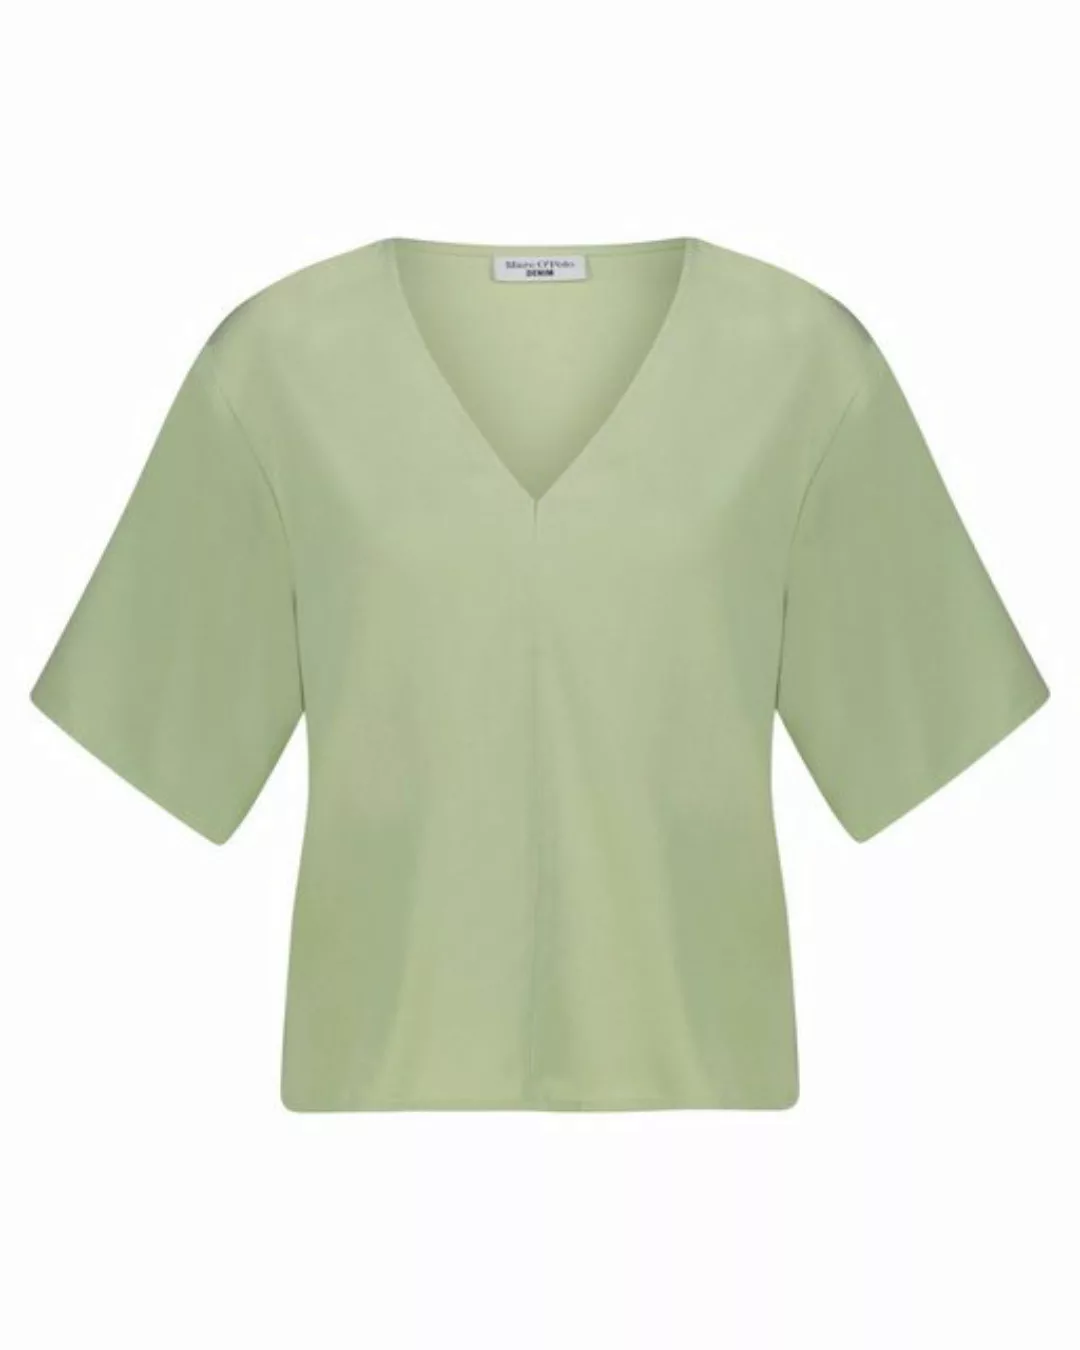 Marc O'Polo DENIM Klassische Bluse T-shirt blouse, short sleeve günstig online kaufen